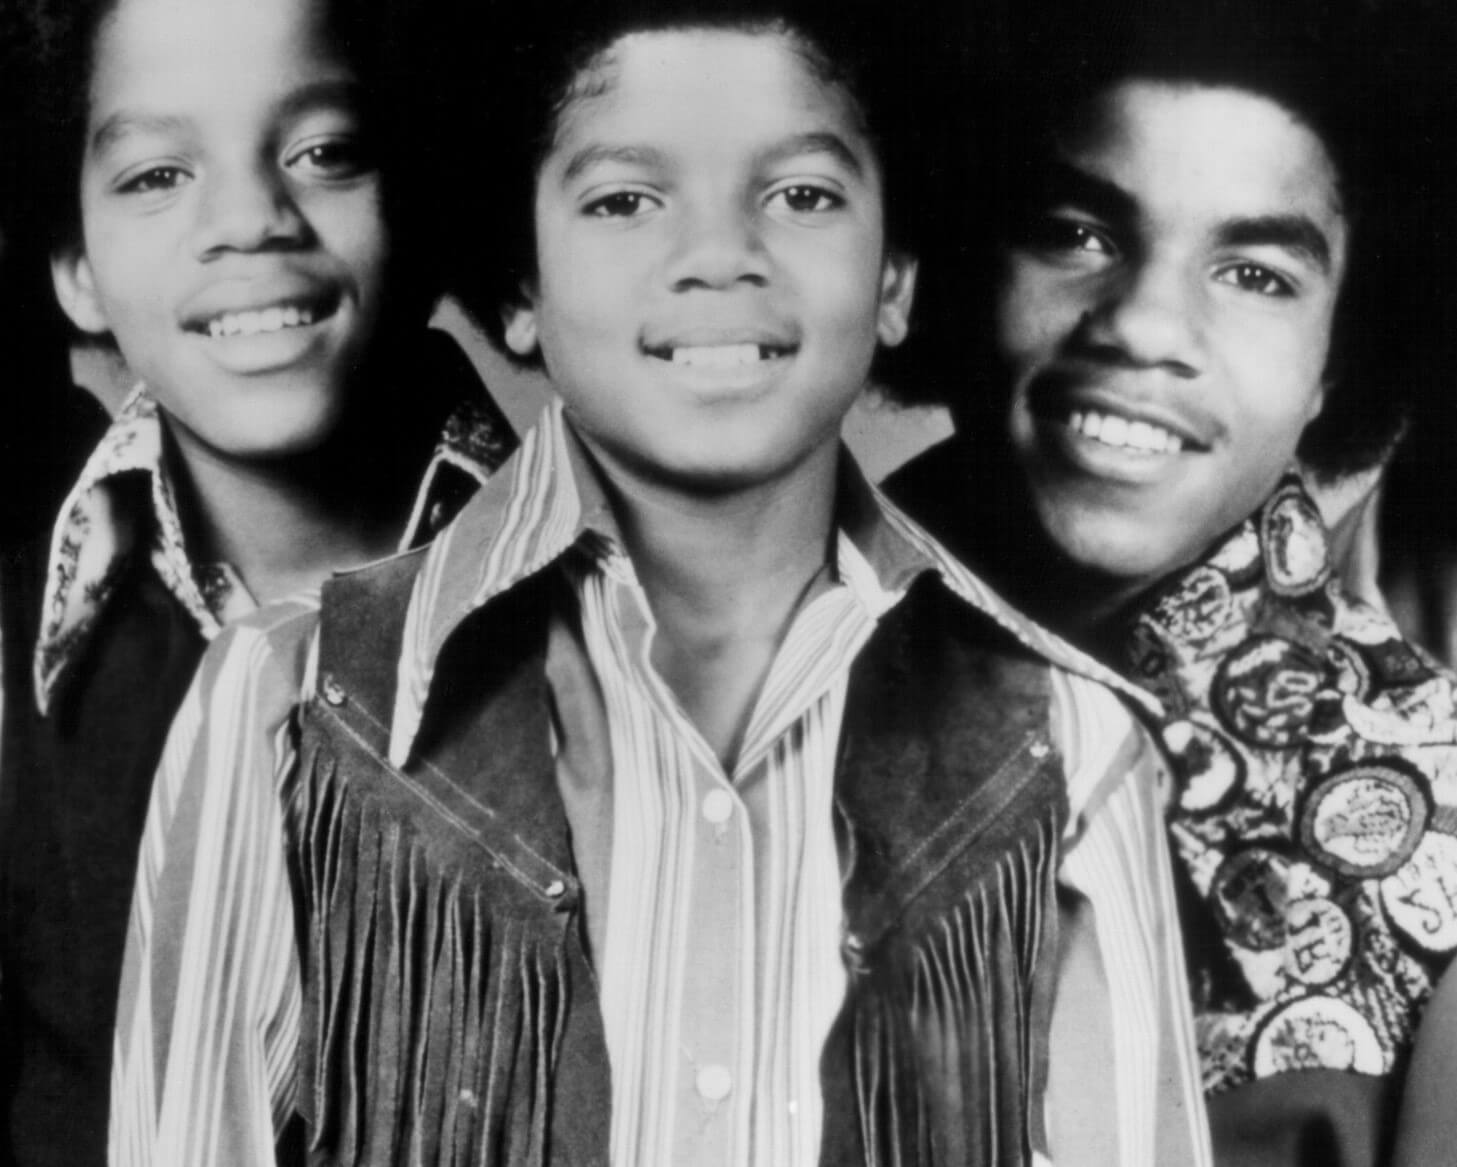 The Jackson 5, a boy band